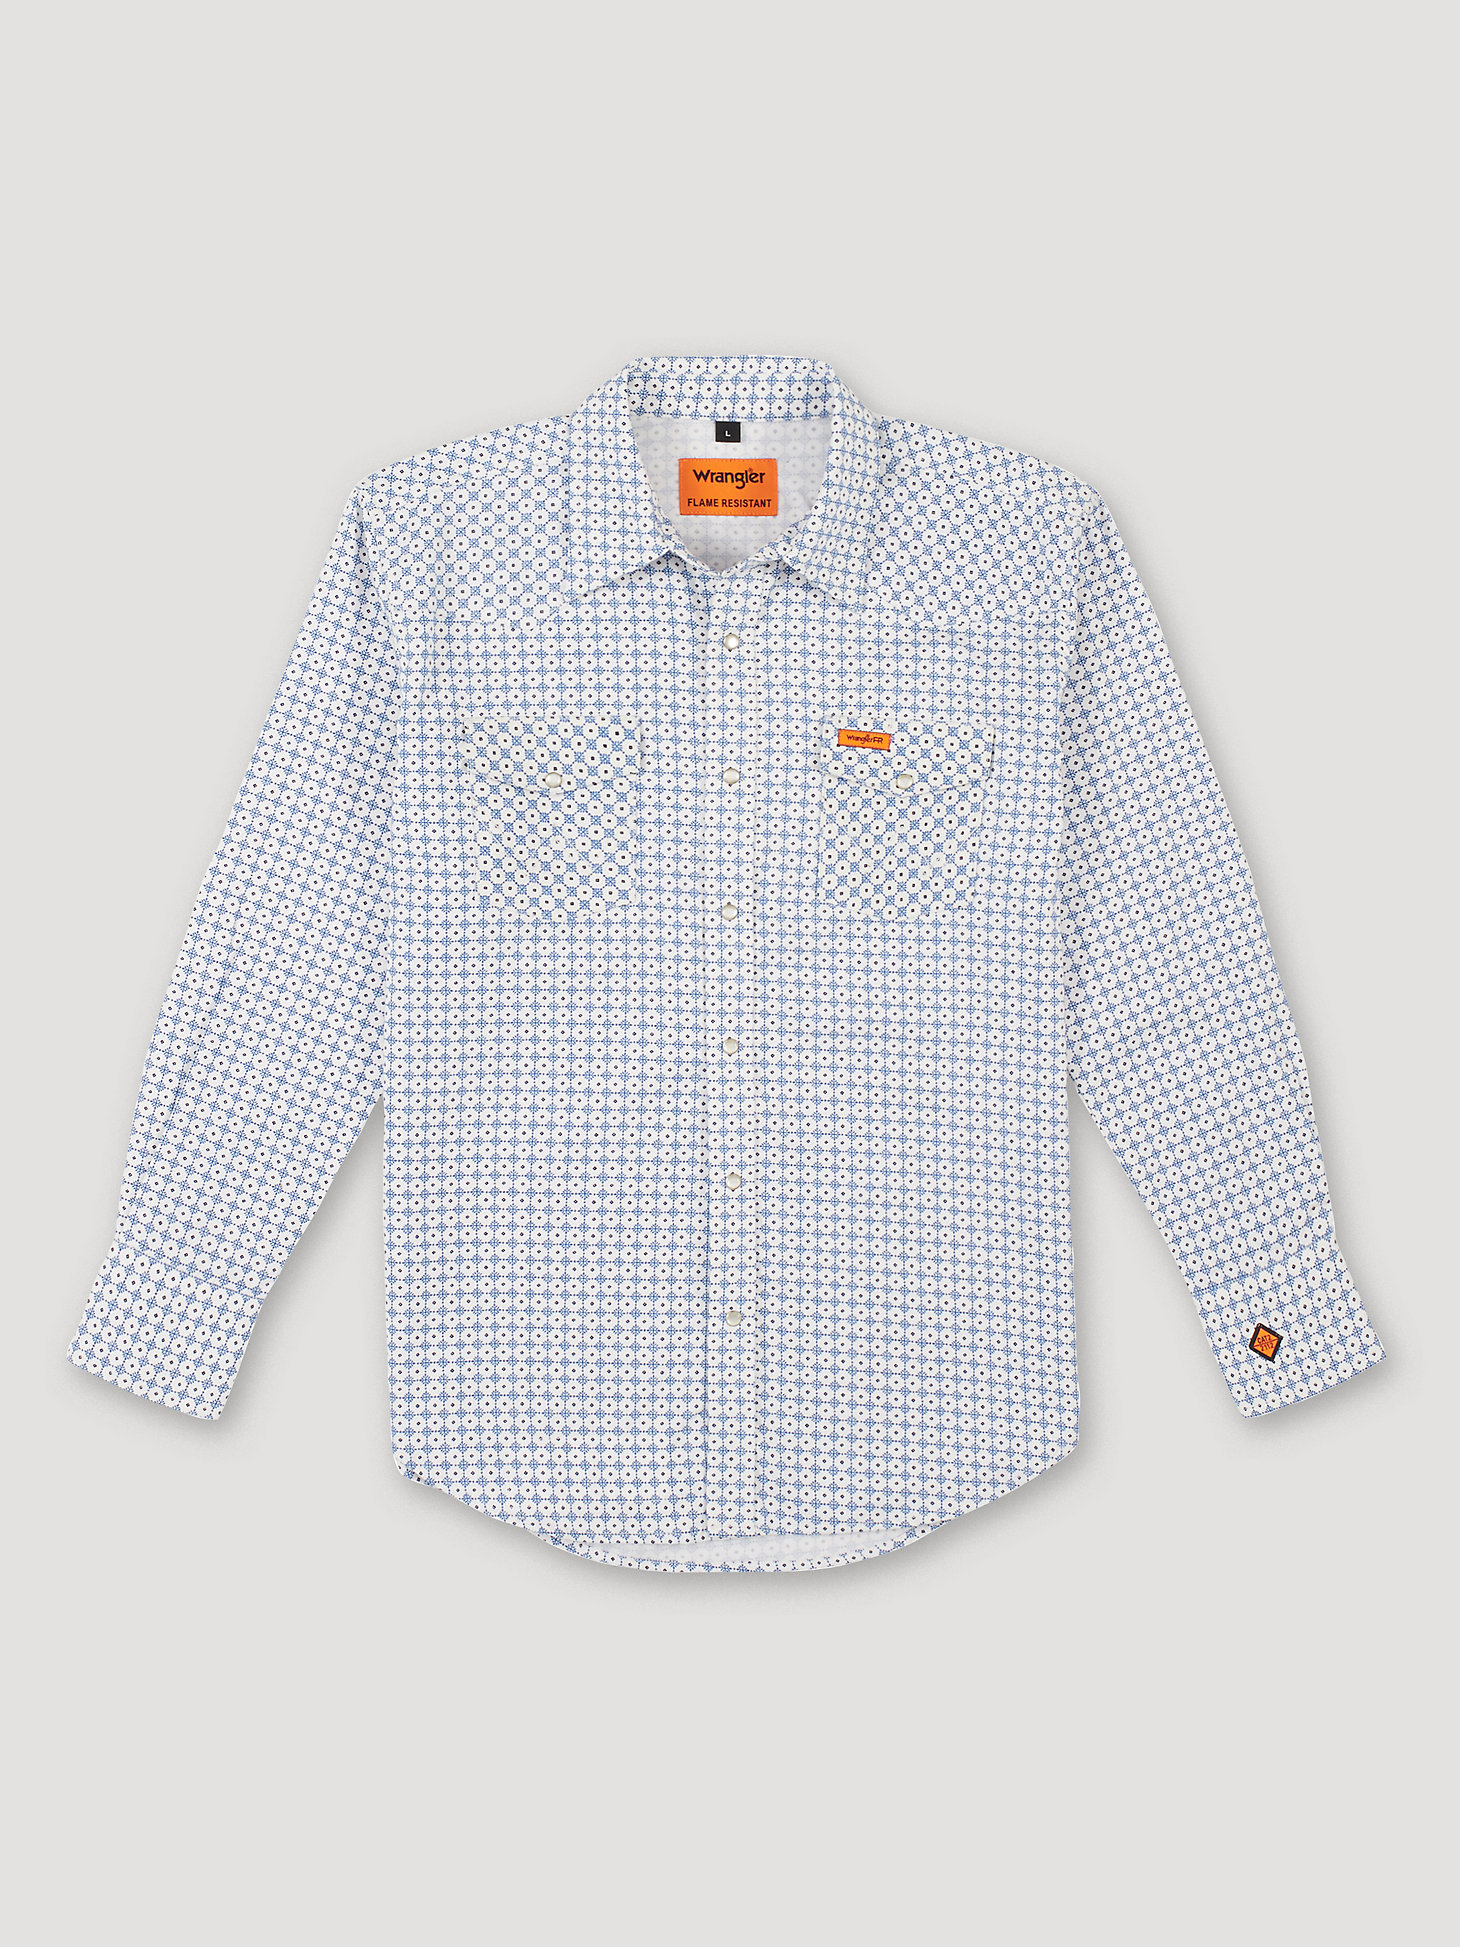 Men's Wrangler® FR Flame Resistant Long Sleeve Western Snap Print Shirt in White/Blue alternative view 5